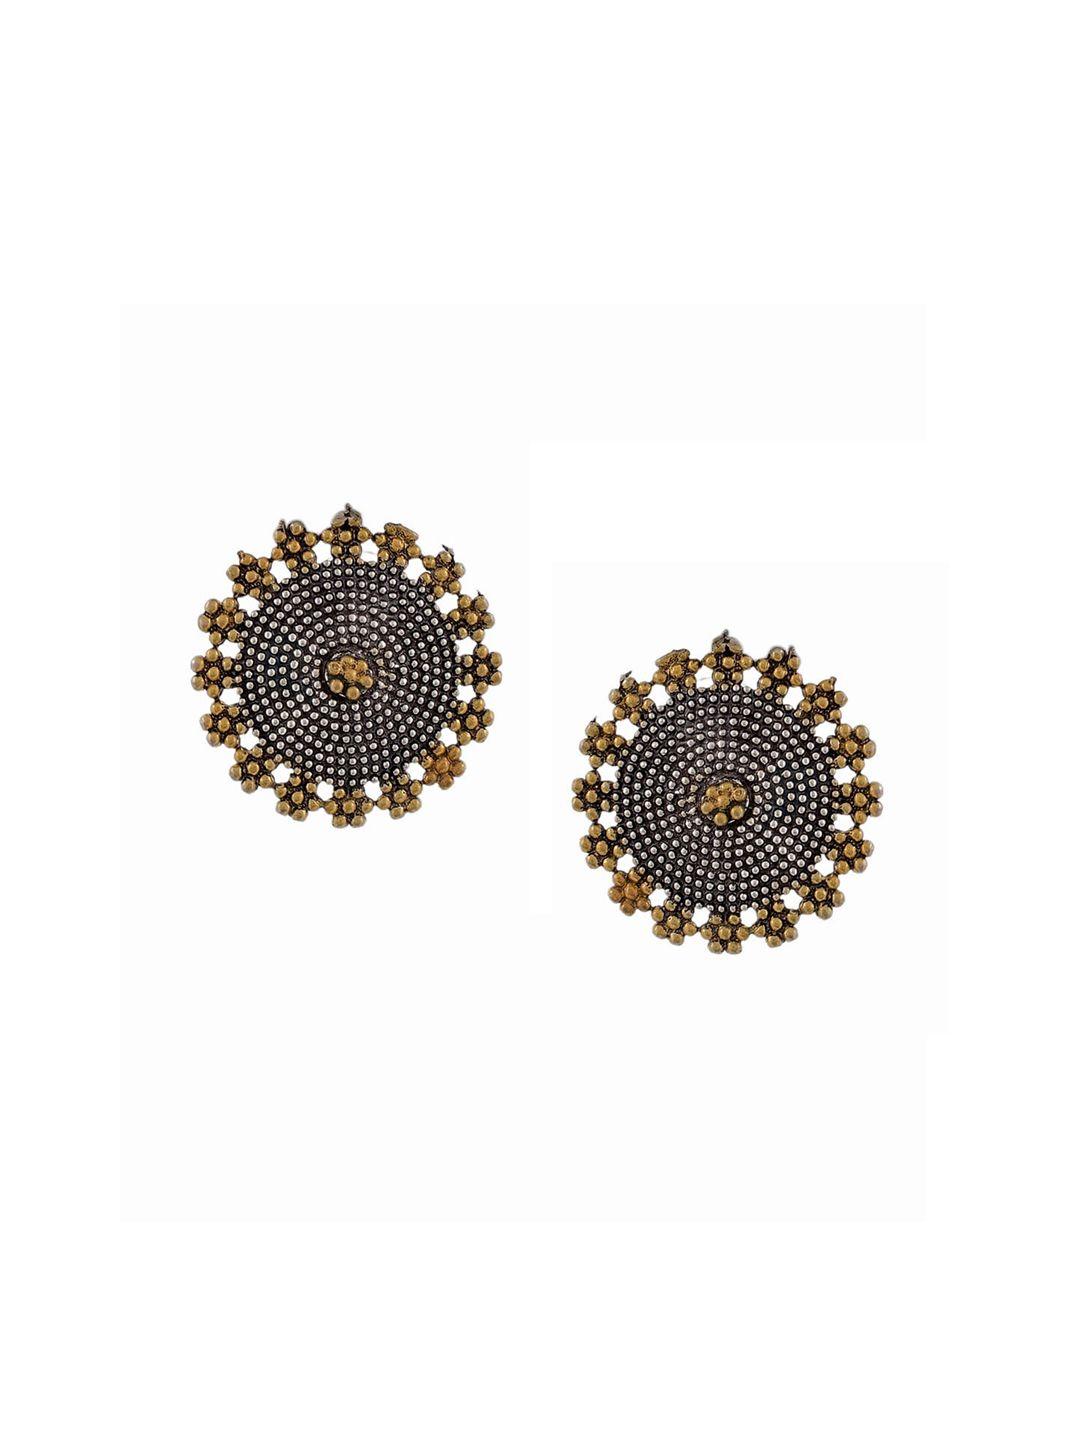 silvermerc designs women silver-toned oxidized circular contemporary studs earrings